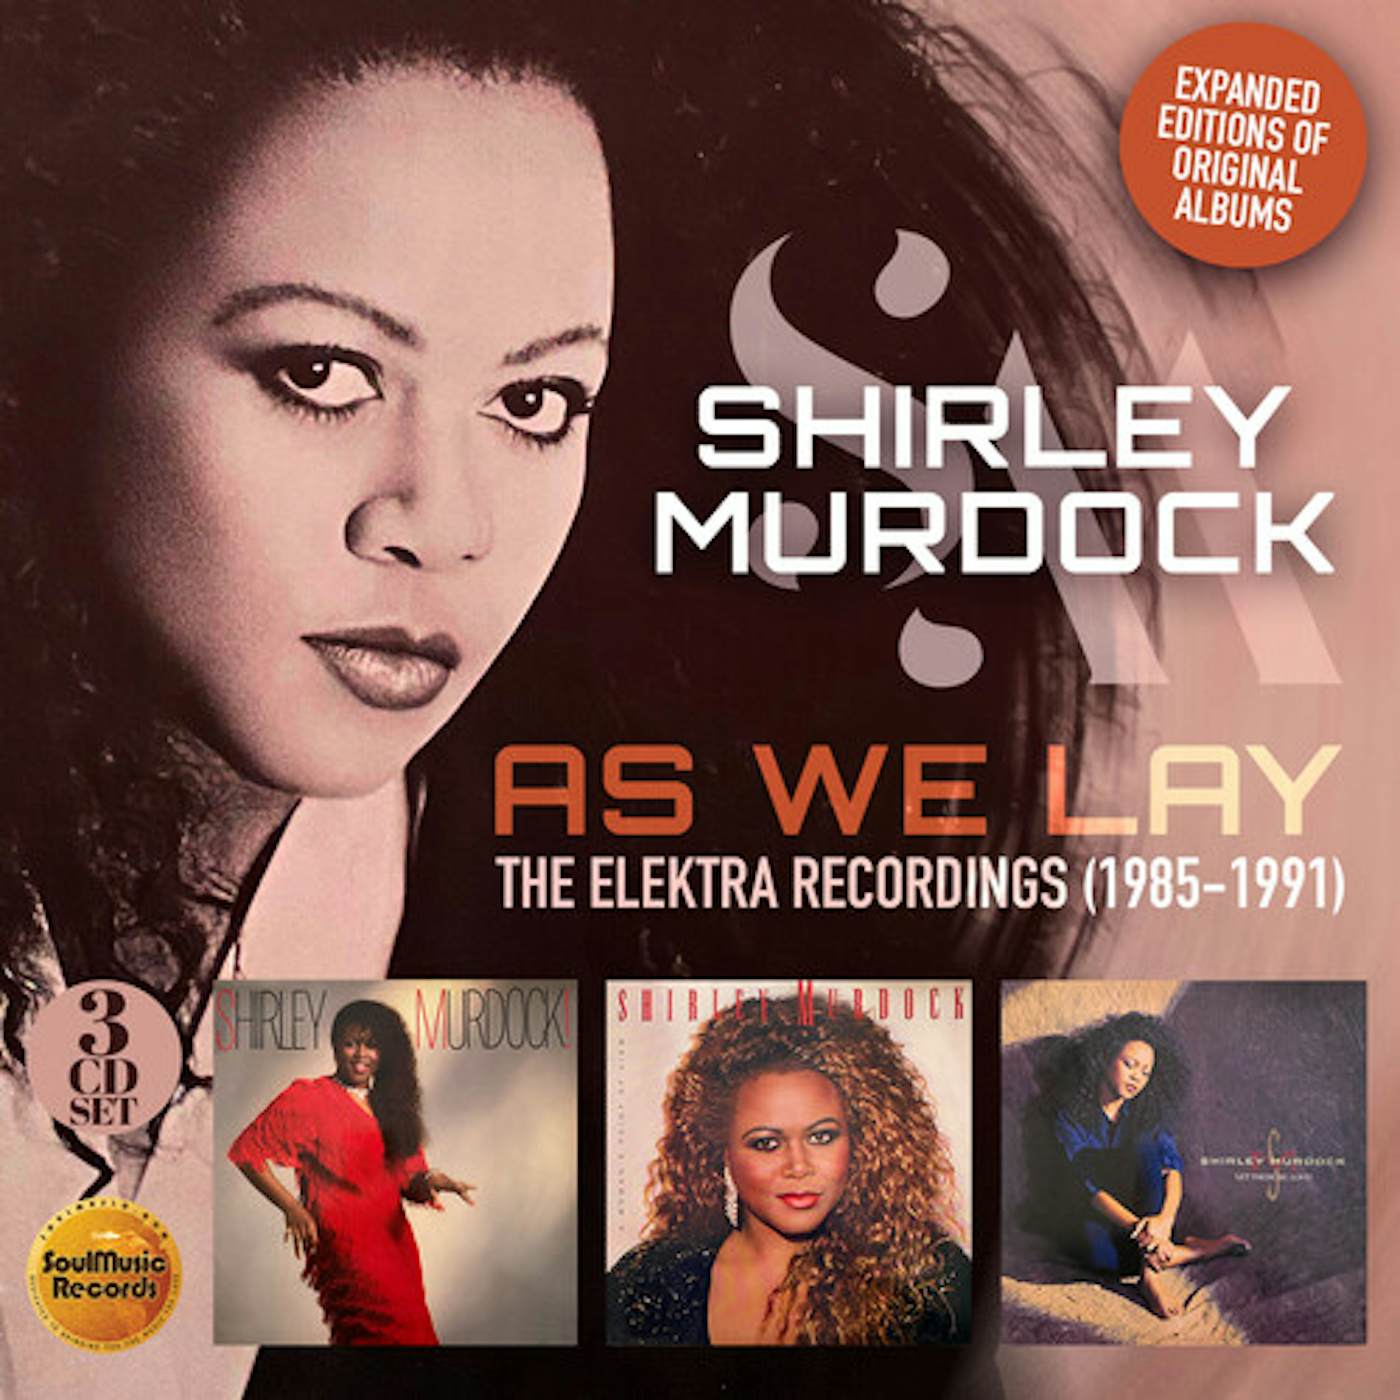 Shirley Murdock AS WE LAY: ELEKTRA RECORDINGS 1985-1991 CD